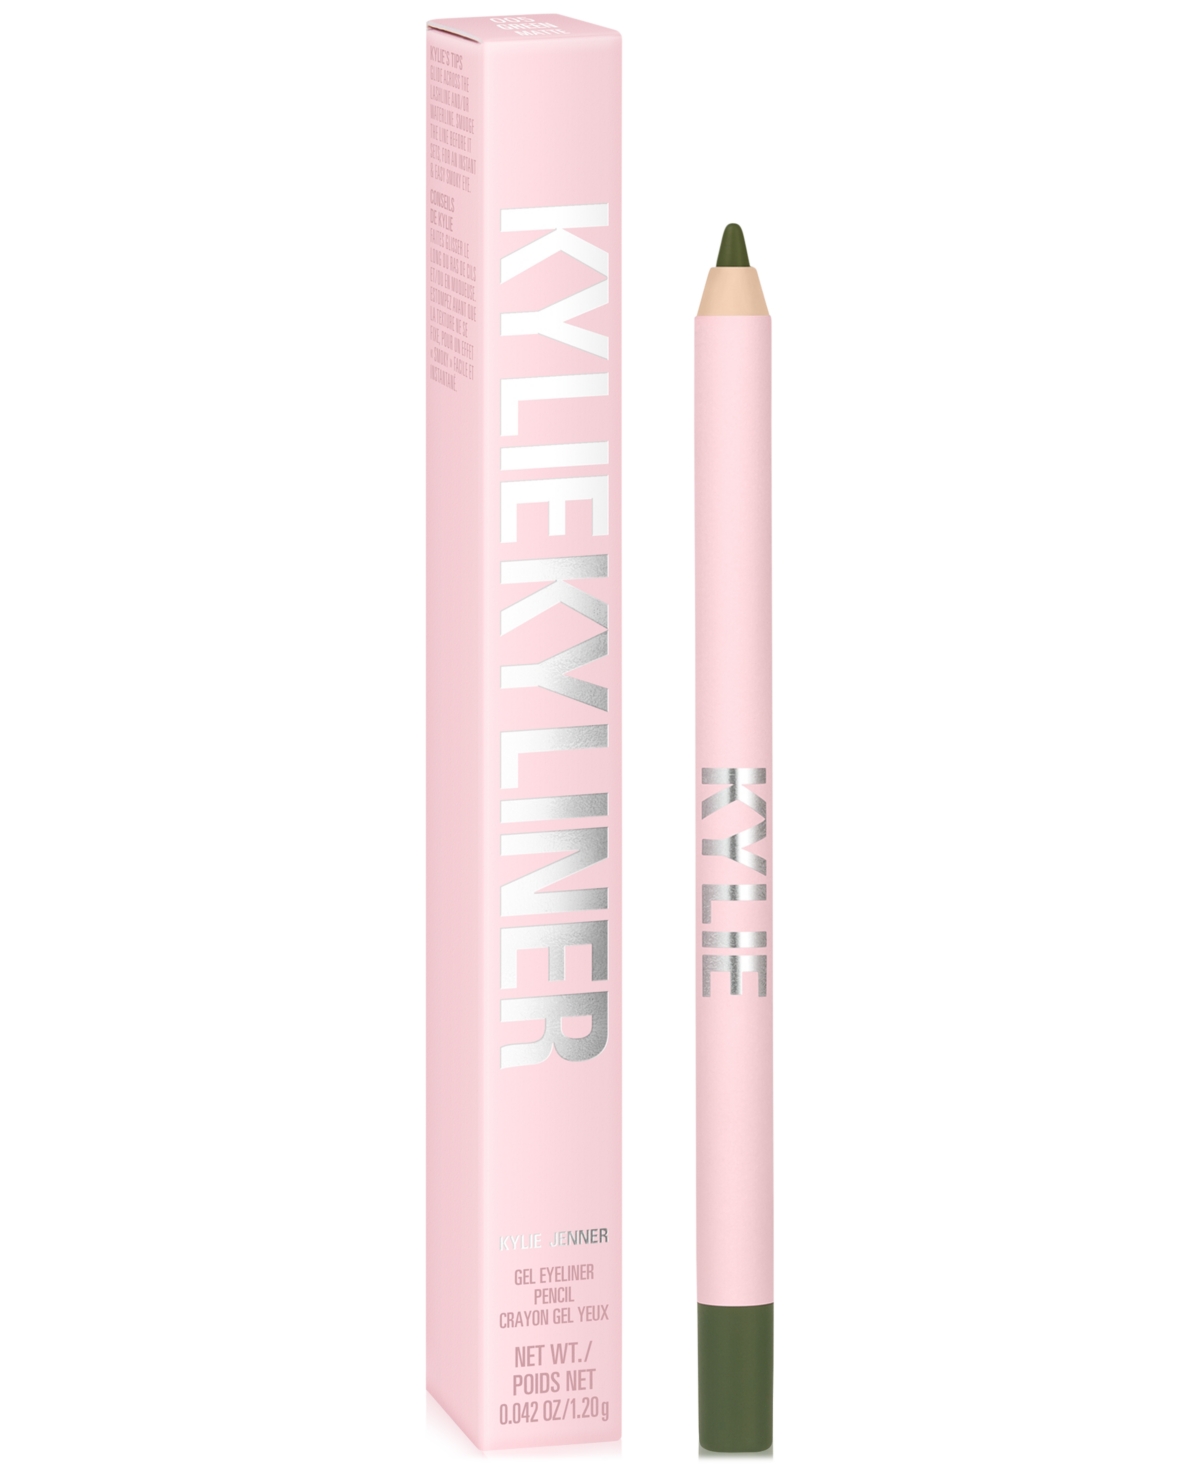 Kylie Cosmetics Kyliner Gel Eyeliner Pencil In Matte Green